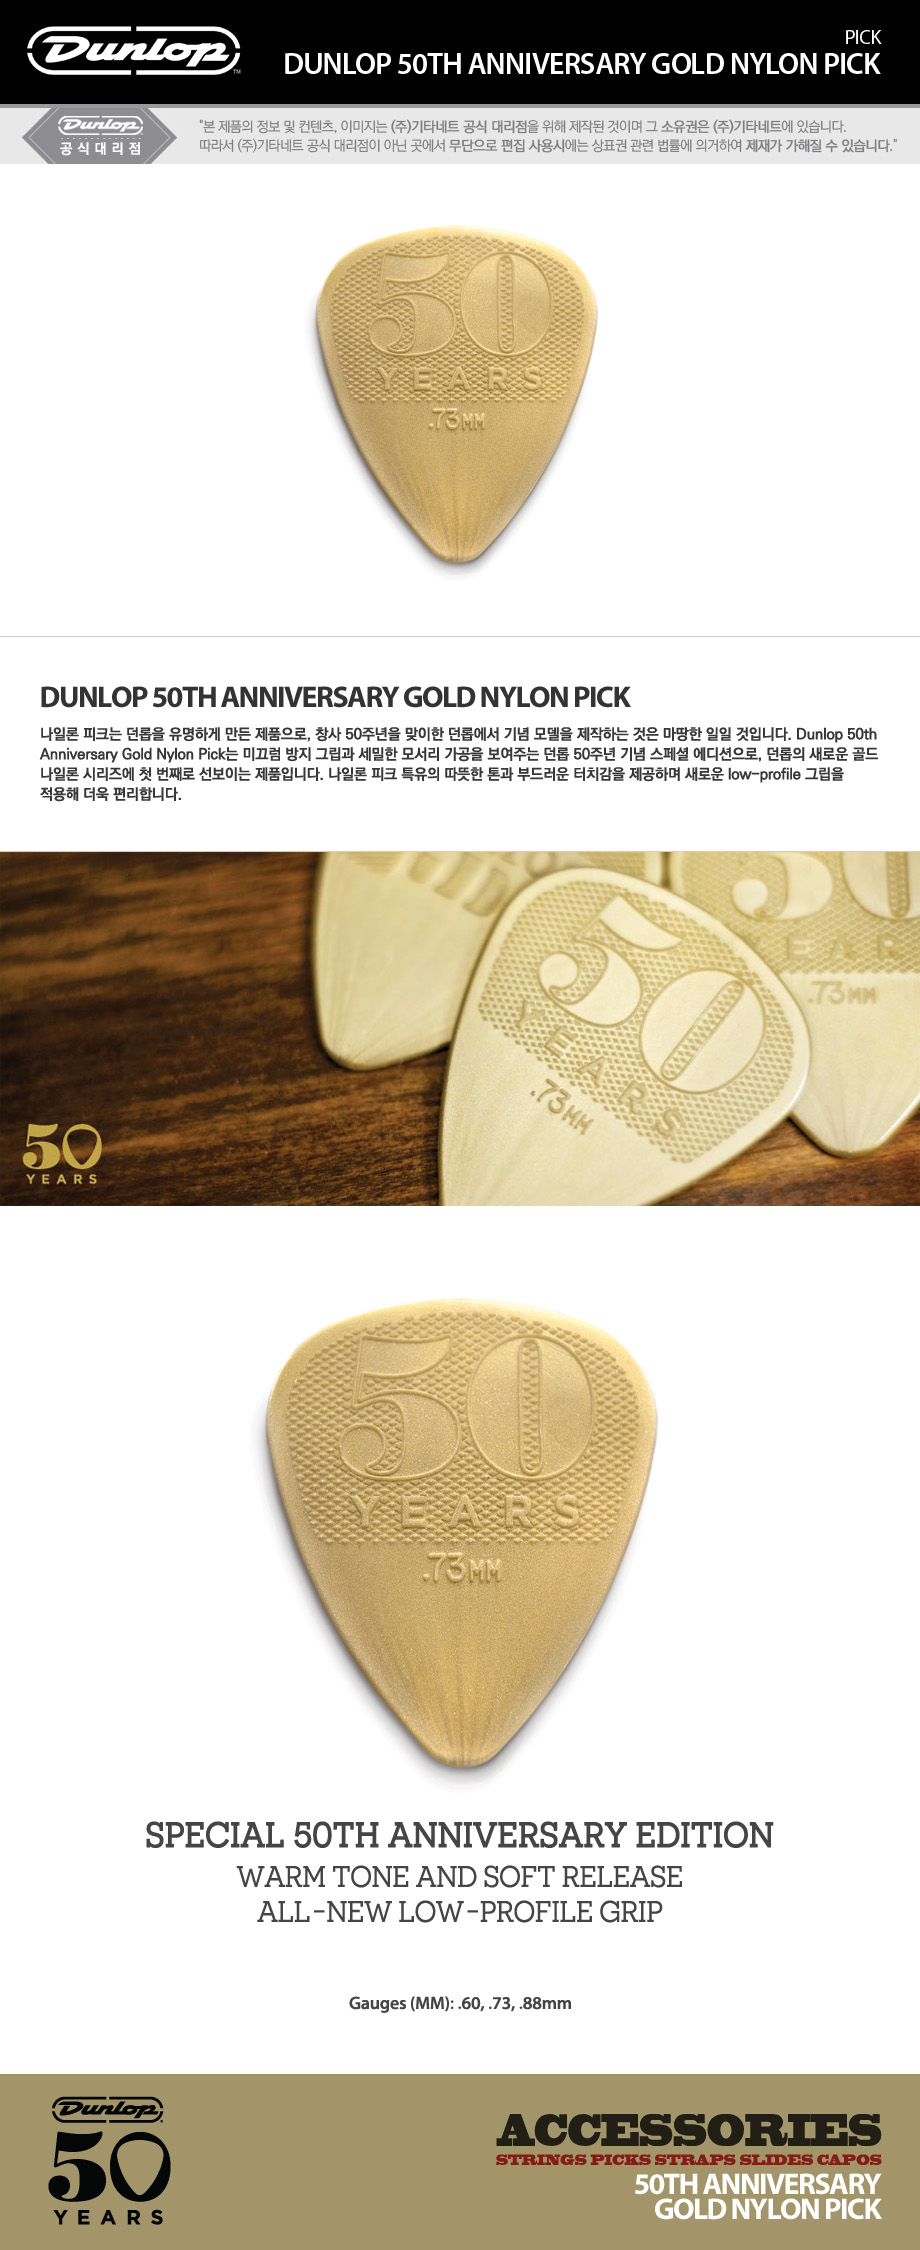 Dunlop Dunlop 50th Anniversary Gold Nylon Pick.jpg